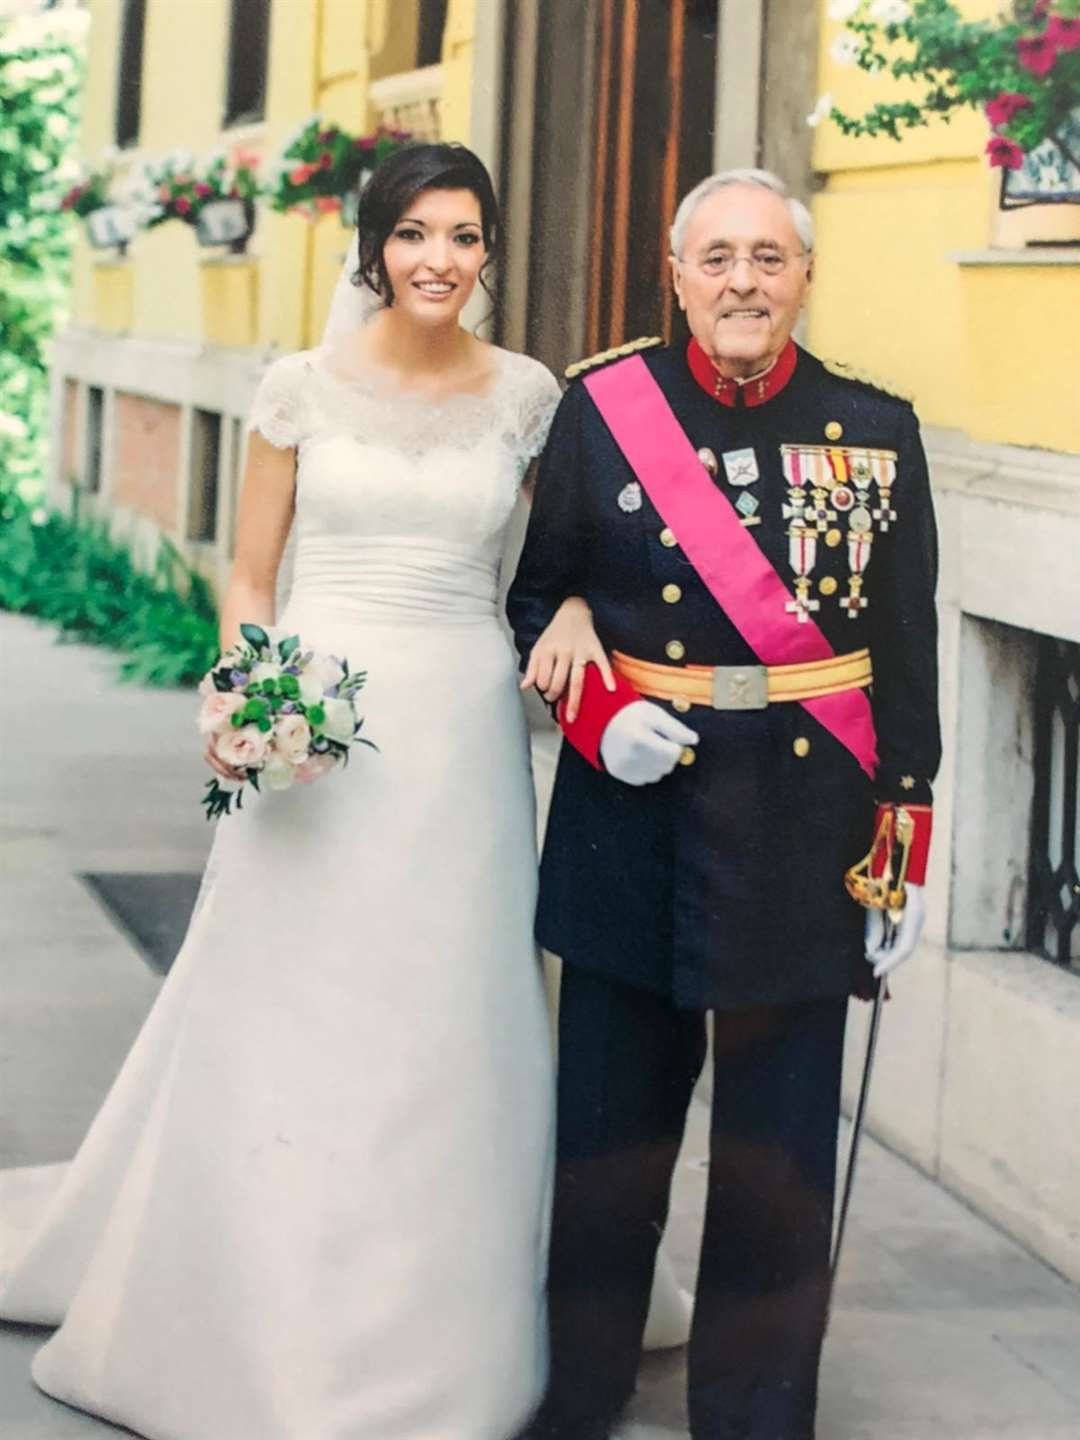 Pilar and Antonio on her wedding day three years ago